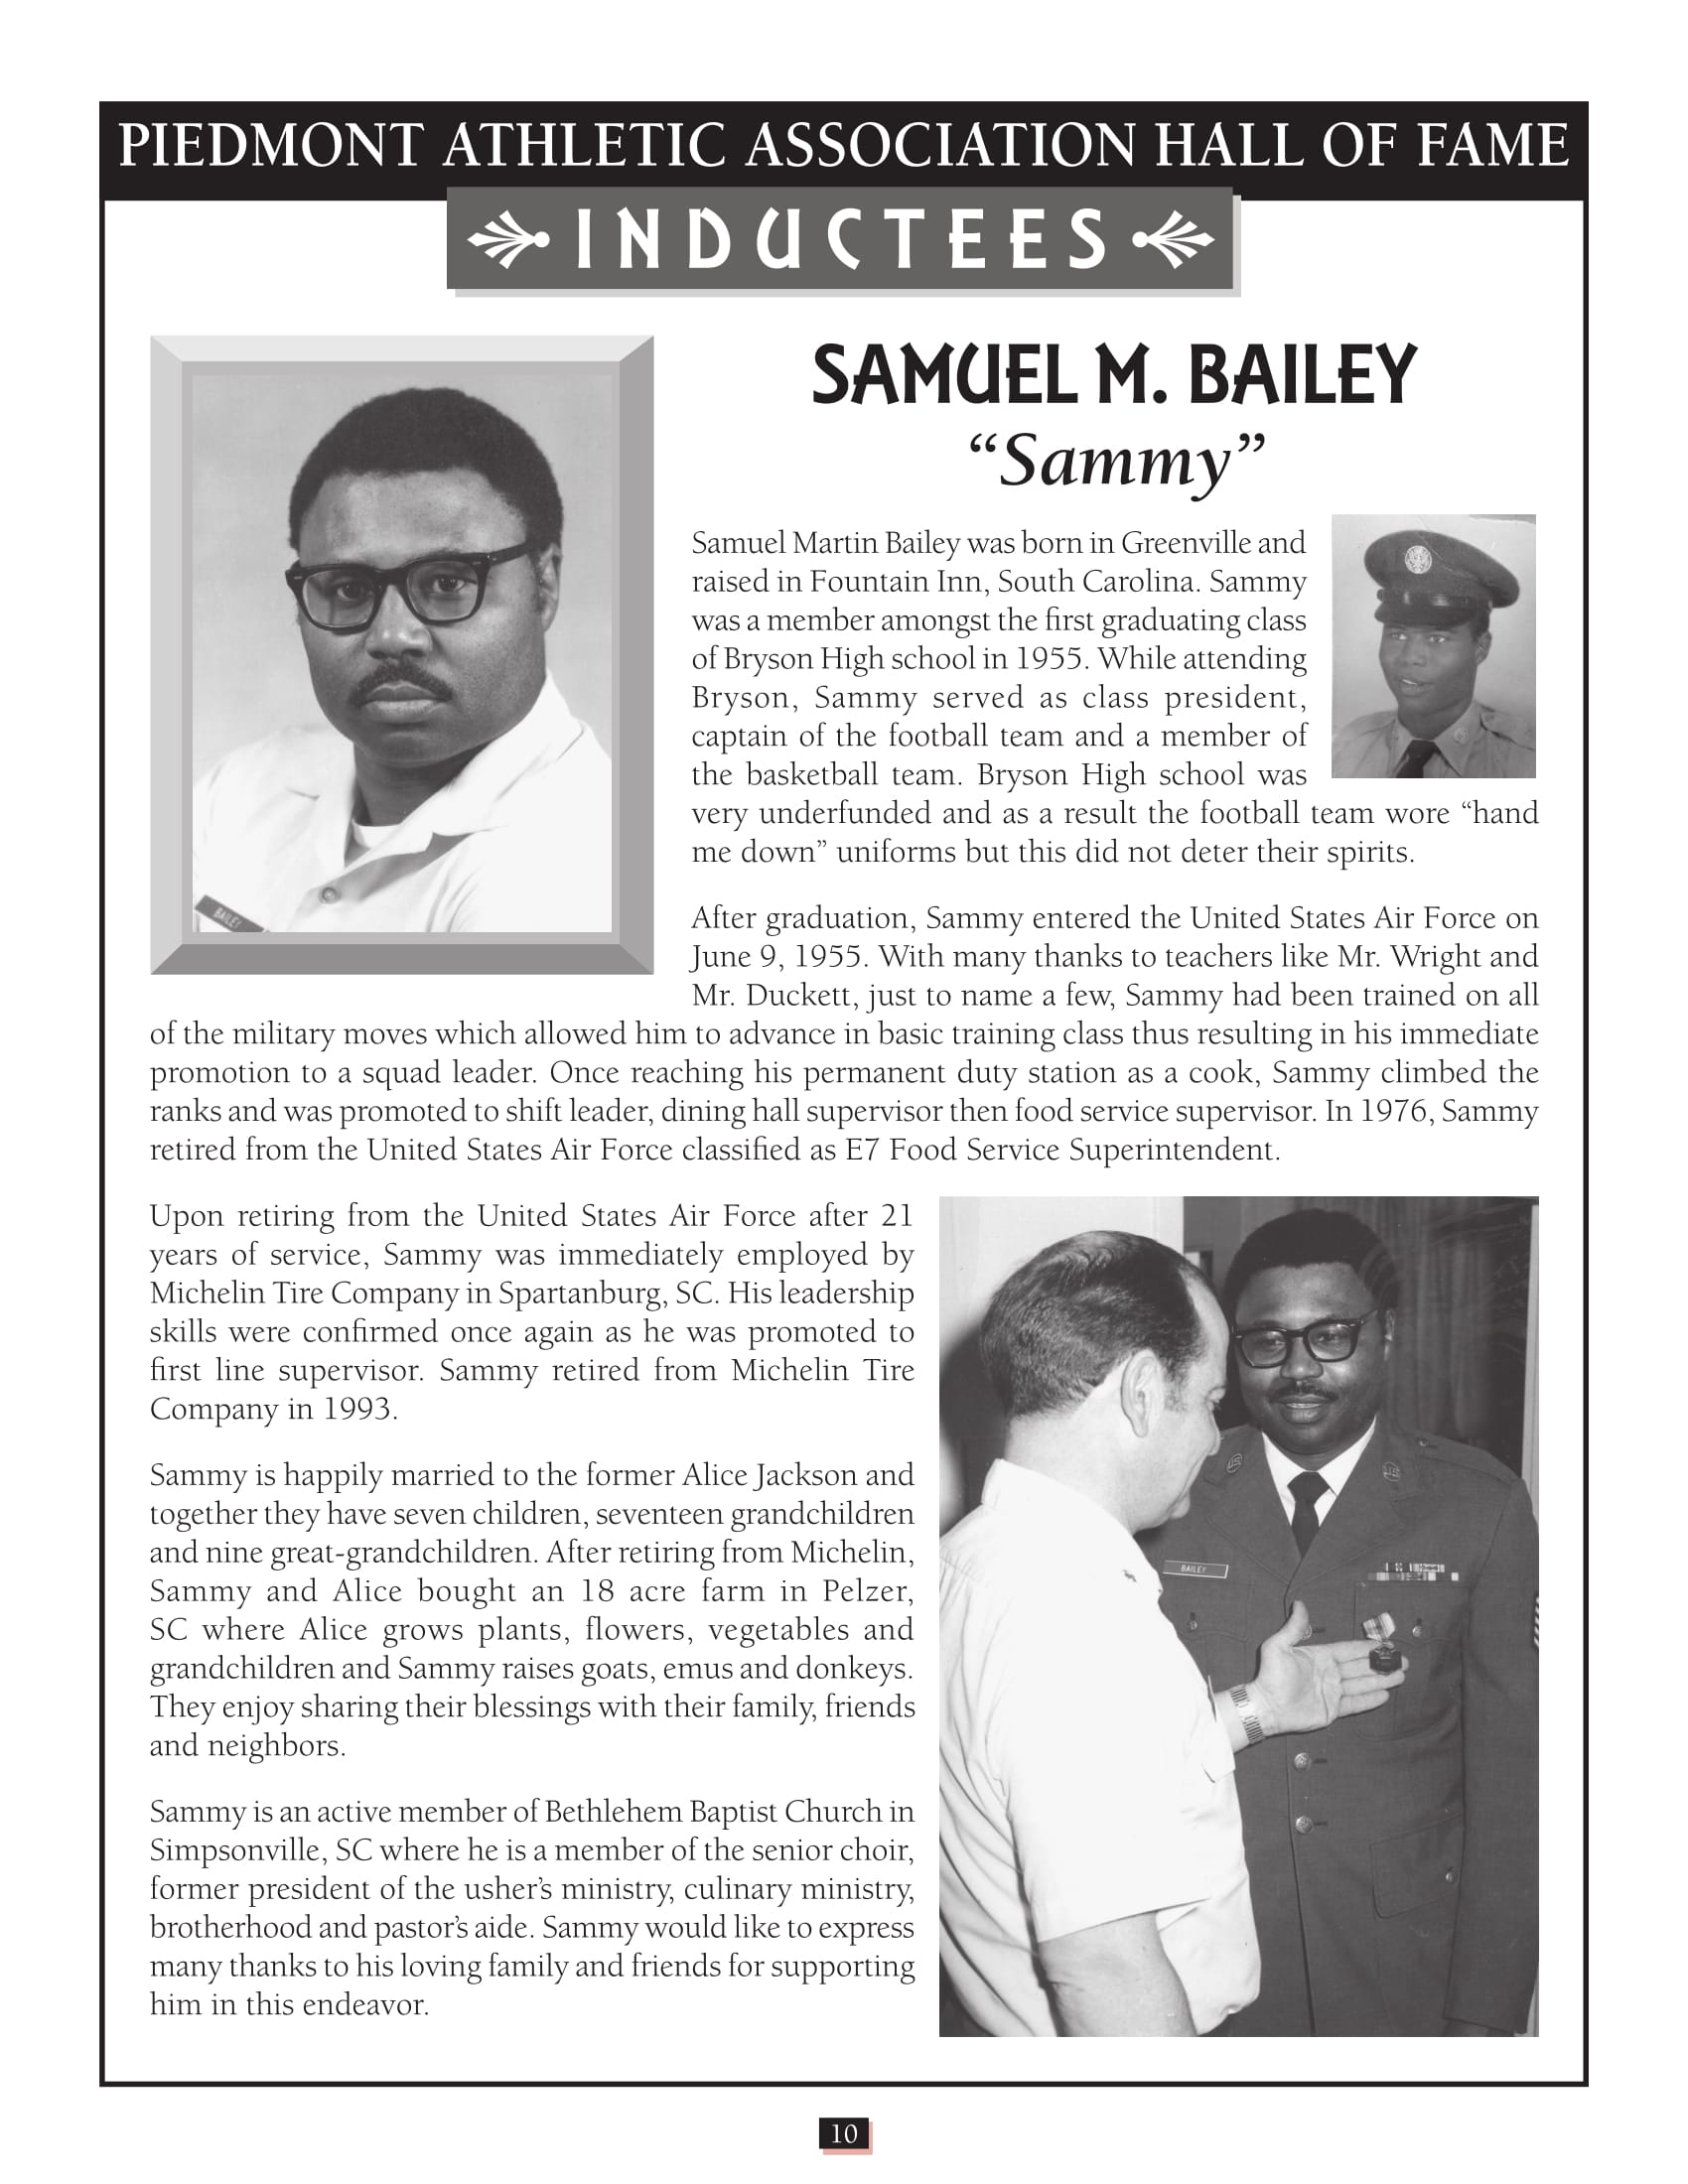 Samuel M. Bailey 'Sammy'